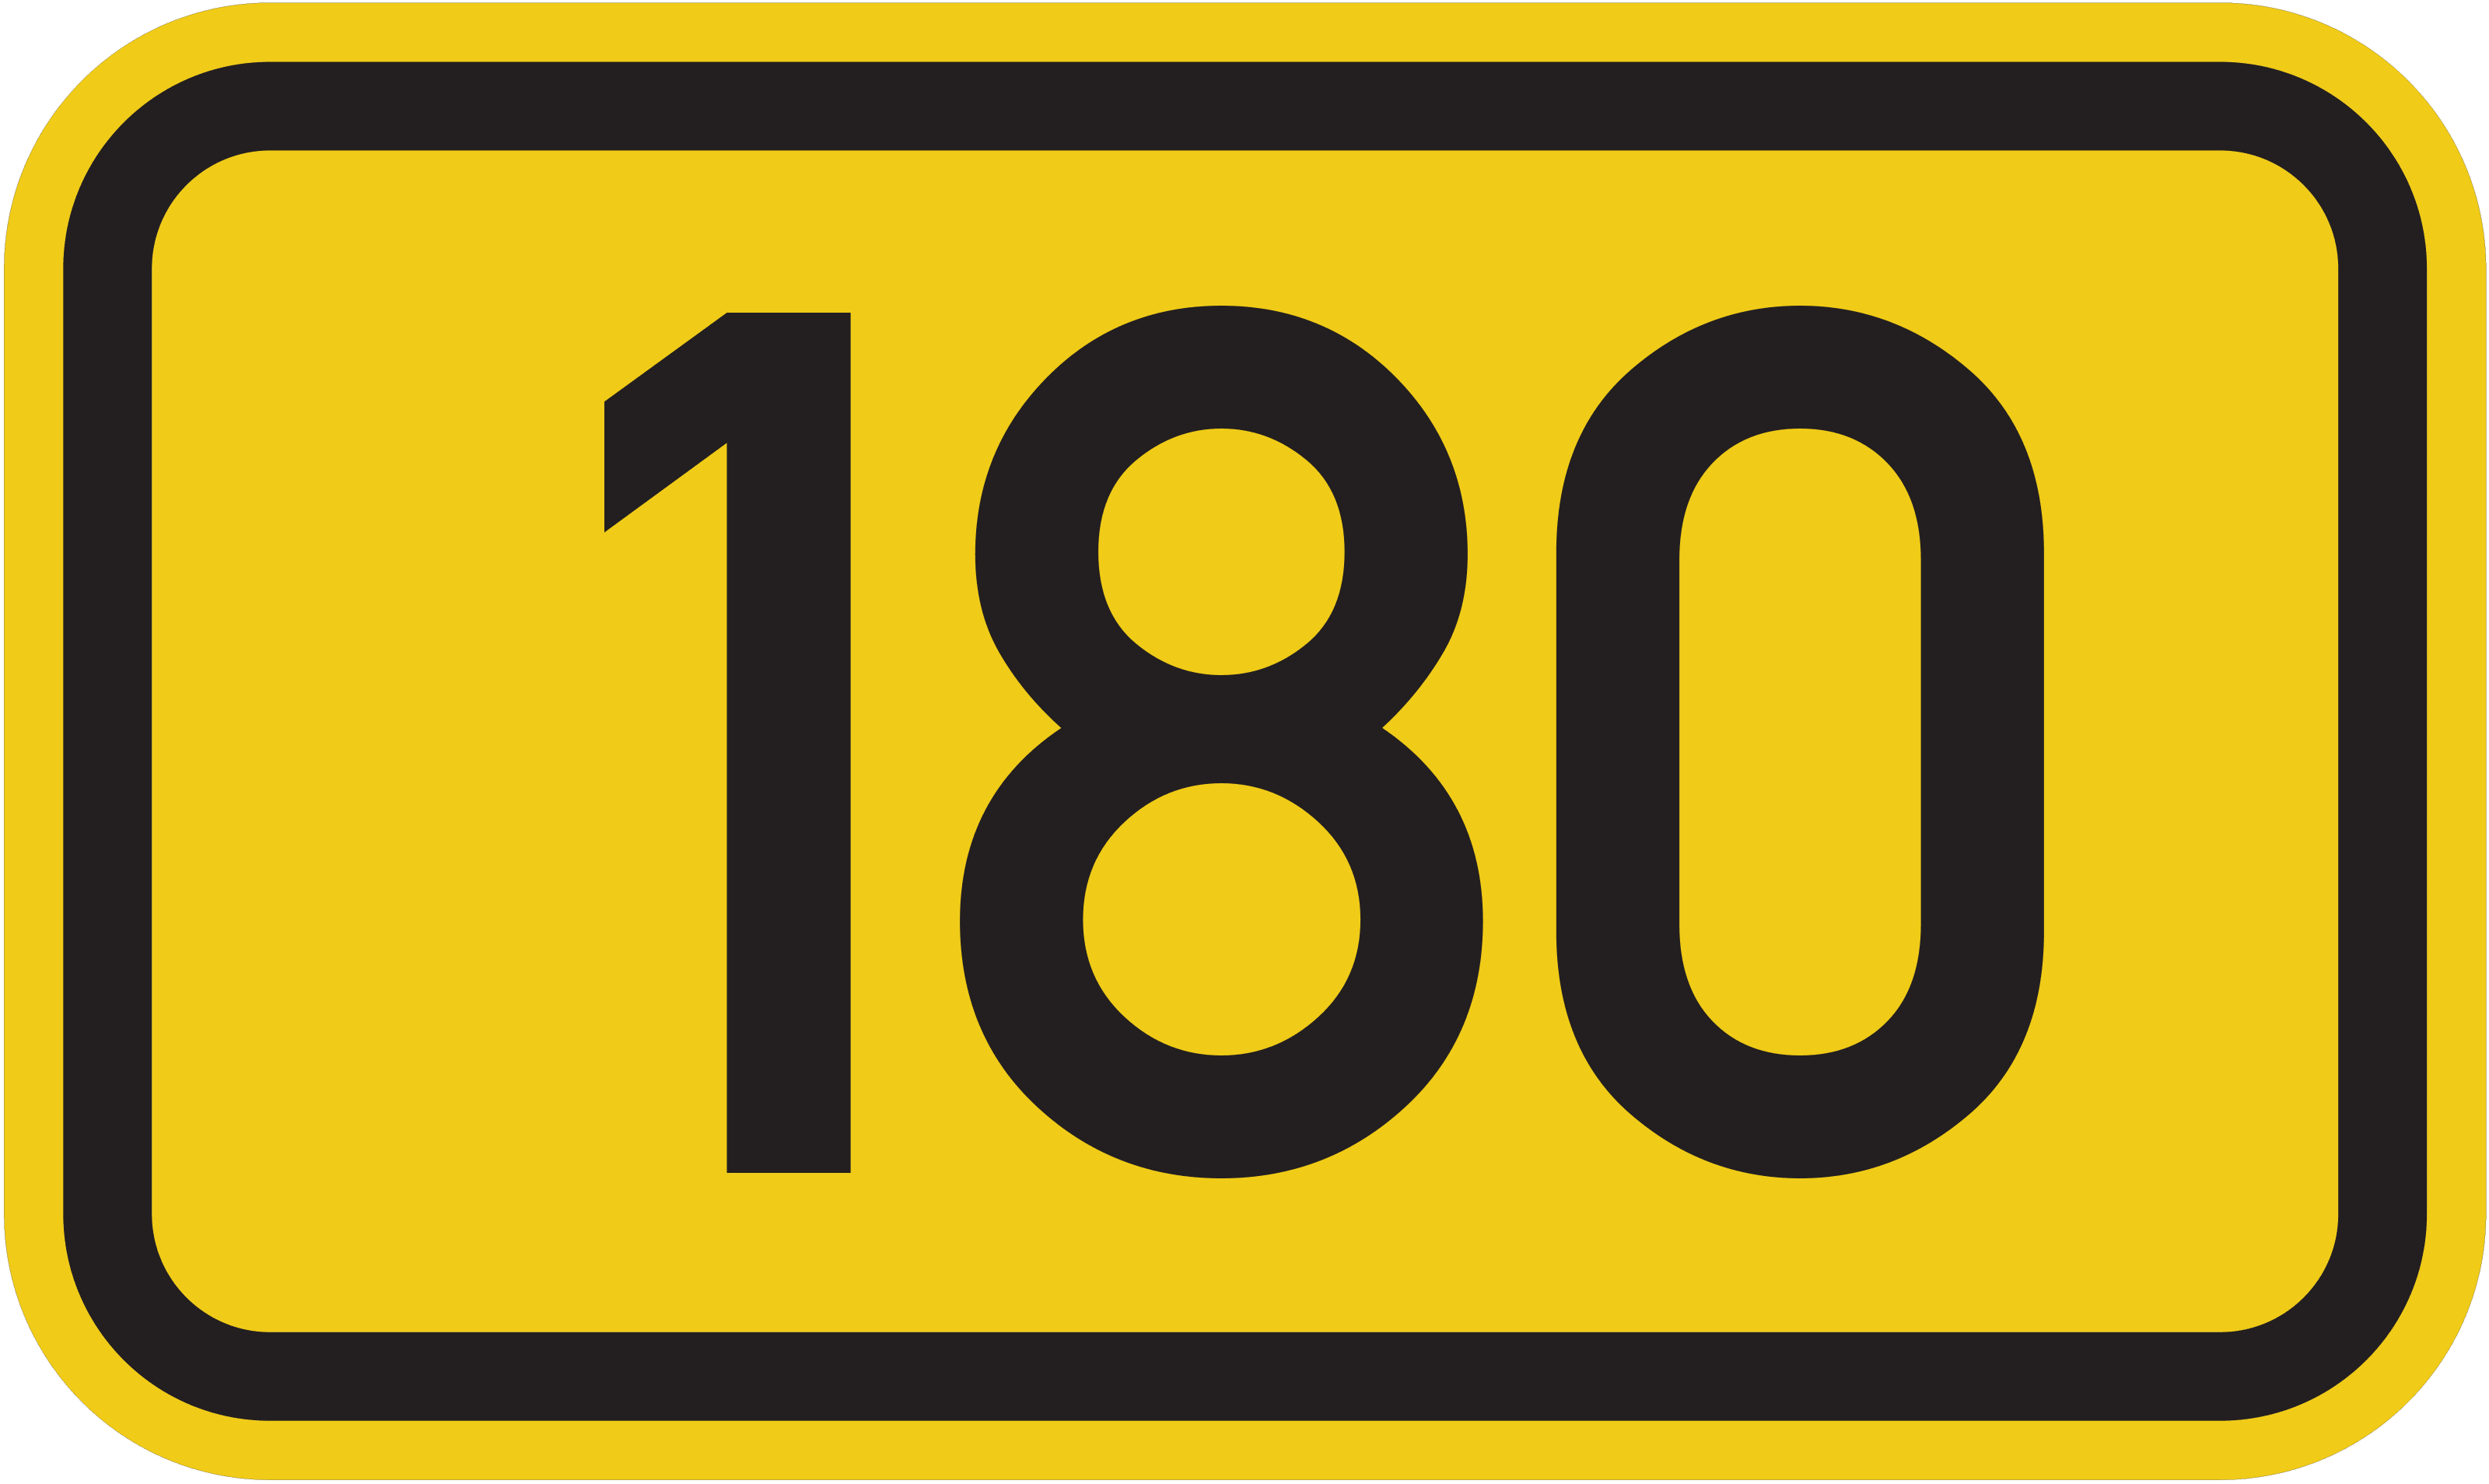 Straßenschild Bundesstraße 180